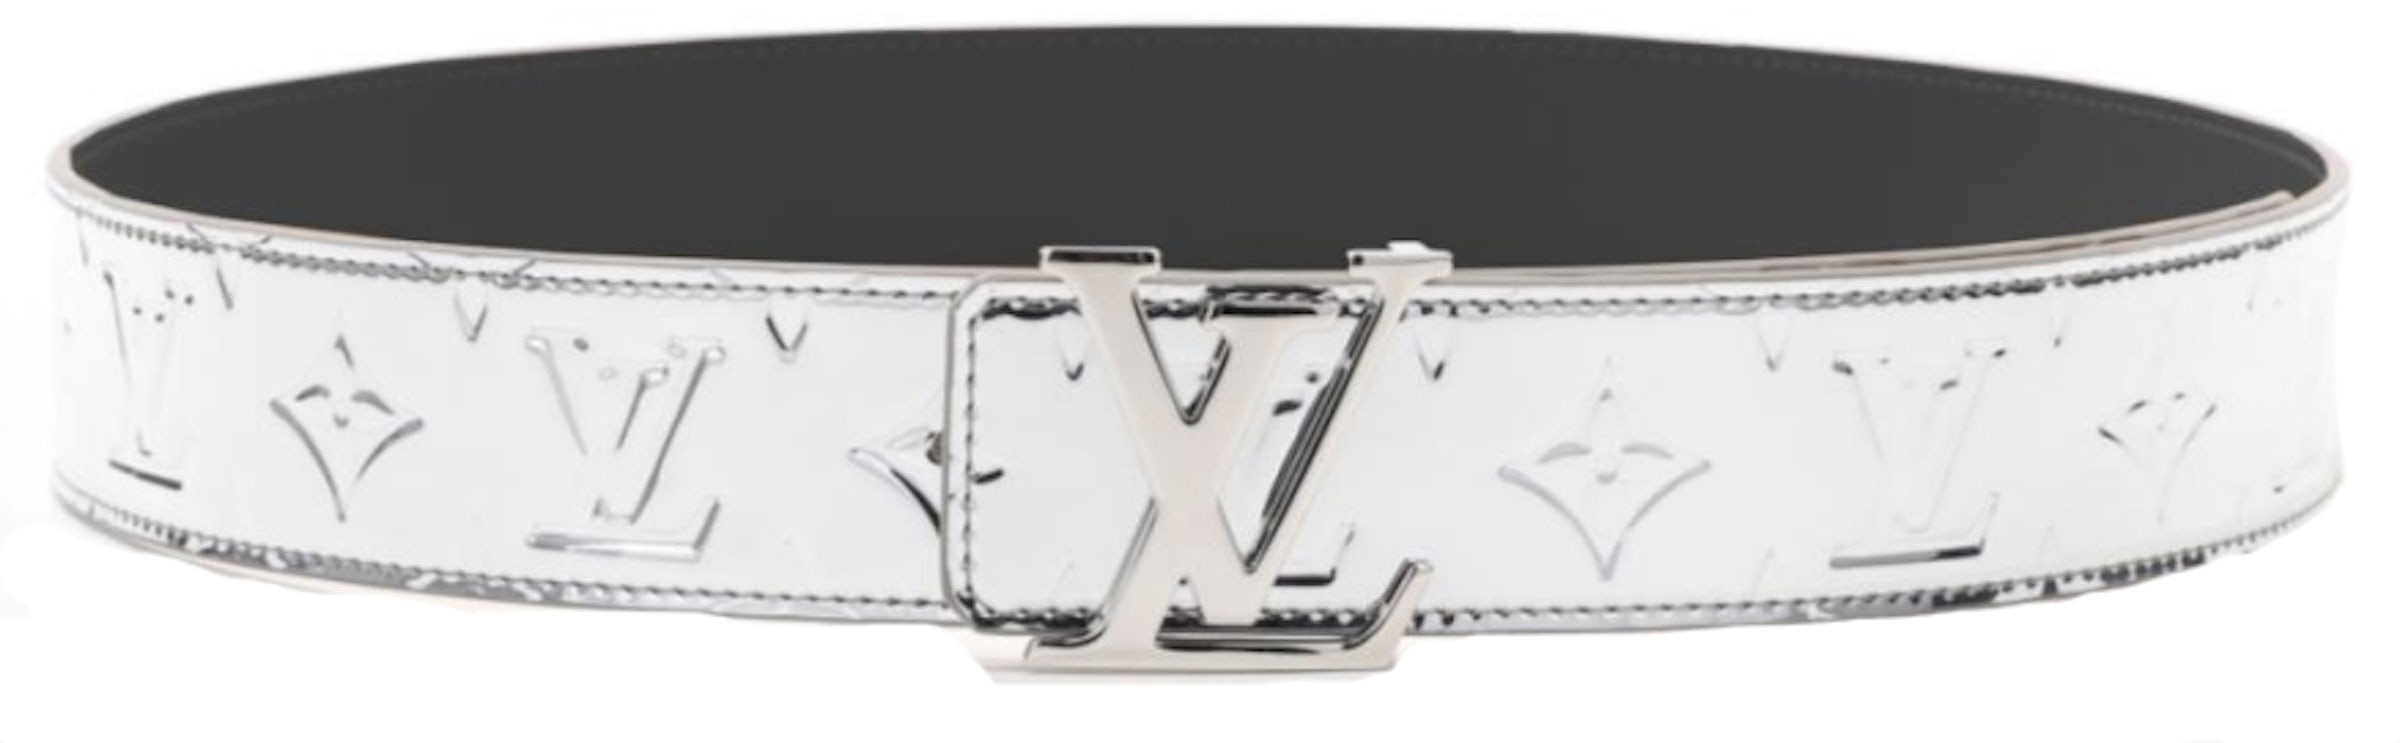 Compra accessori Louis Vuitton Belt - StockX